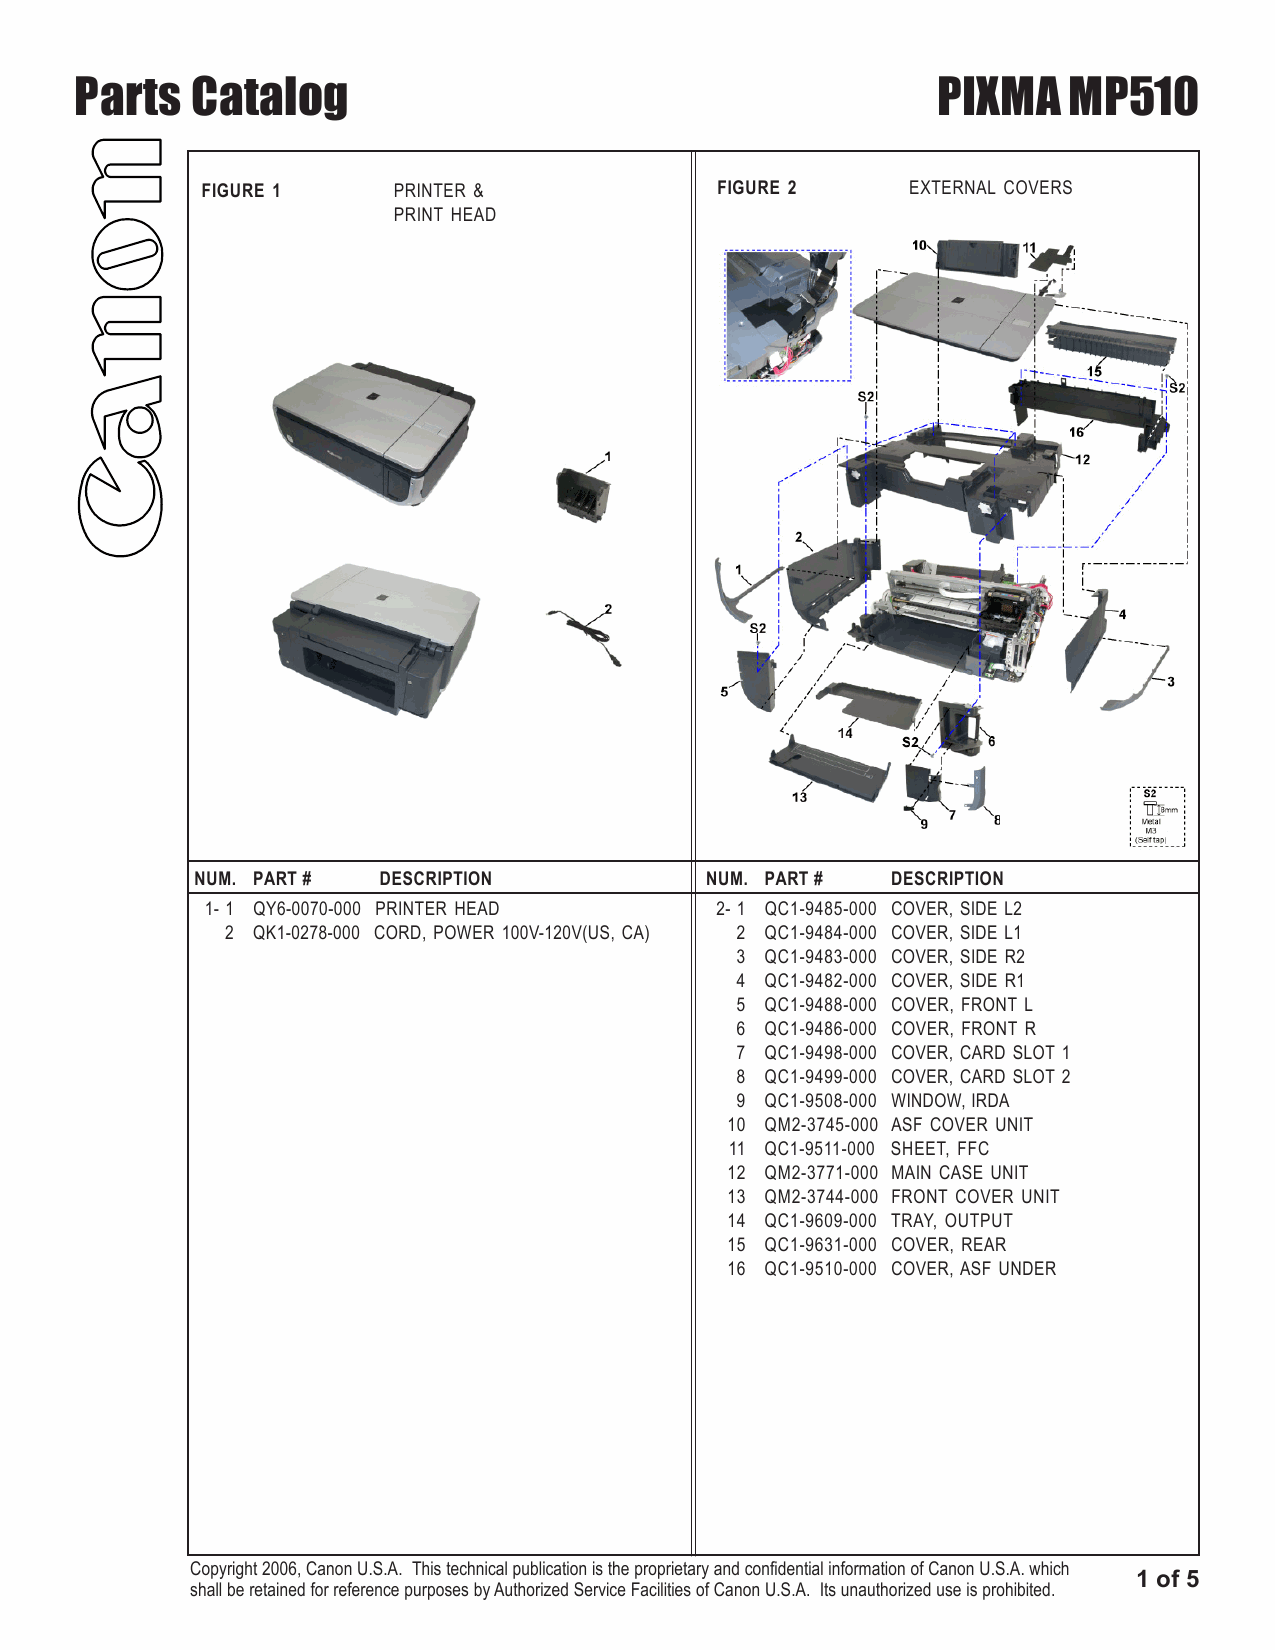 Canon PIXMA MP510 Parts Catalog Manual-2